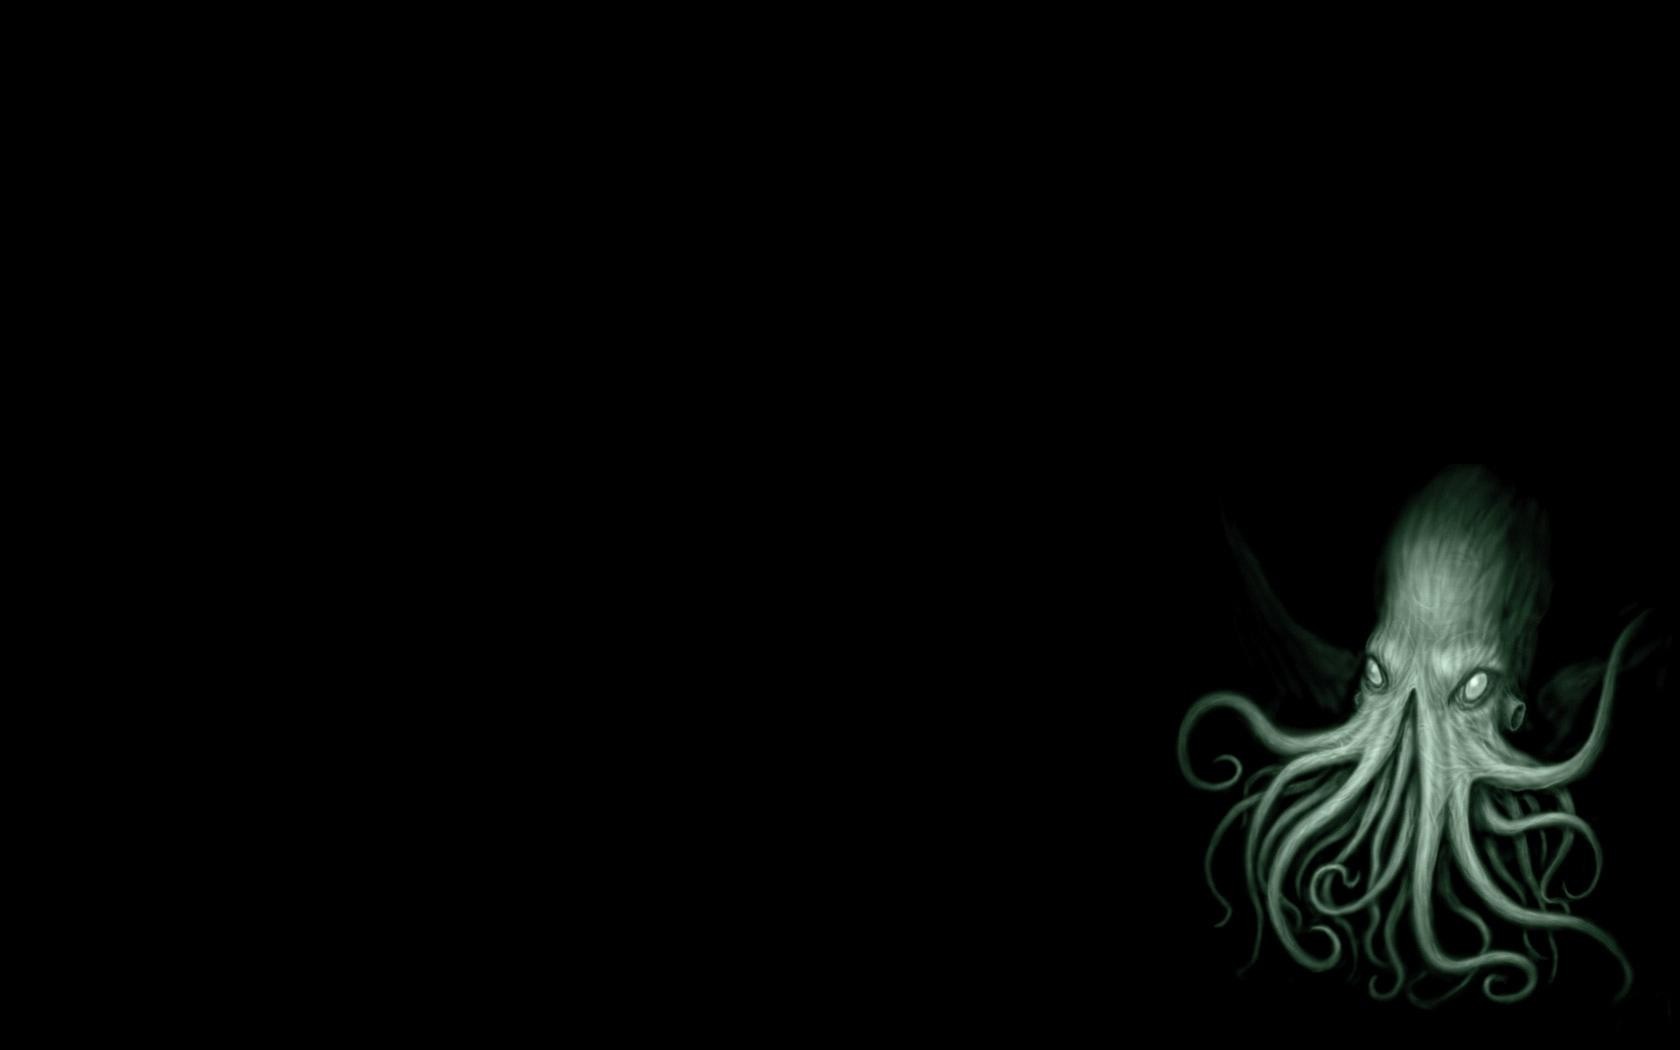 Hq definition wallpaper desktop octopus